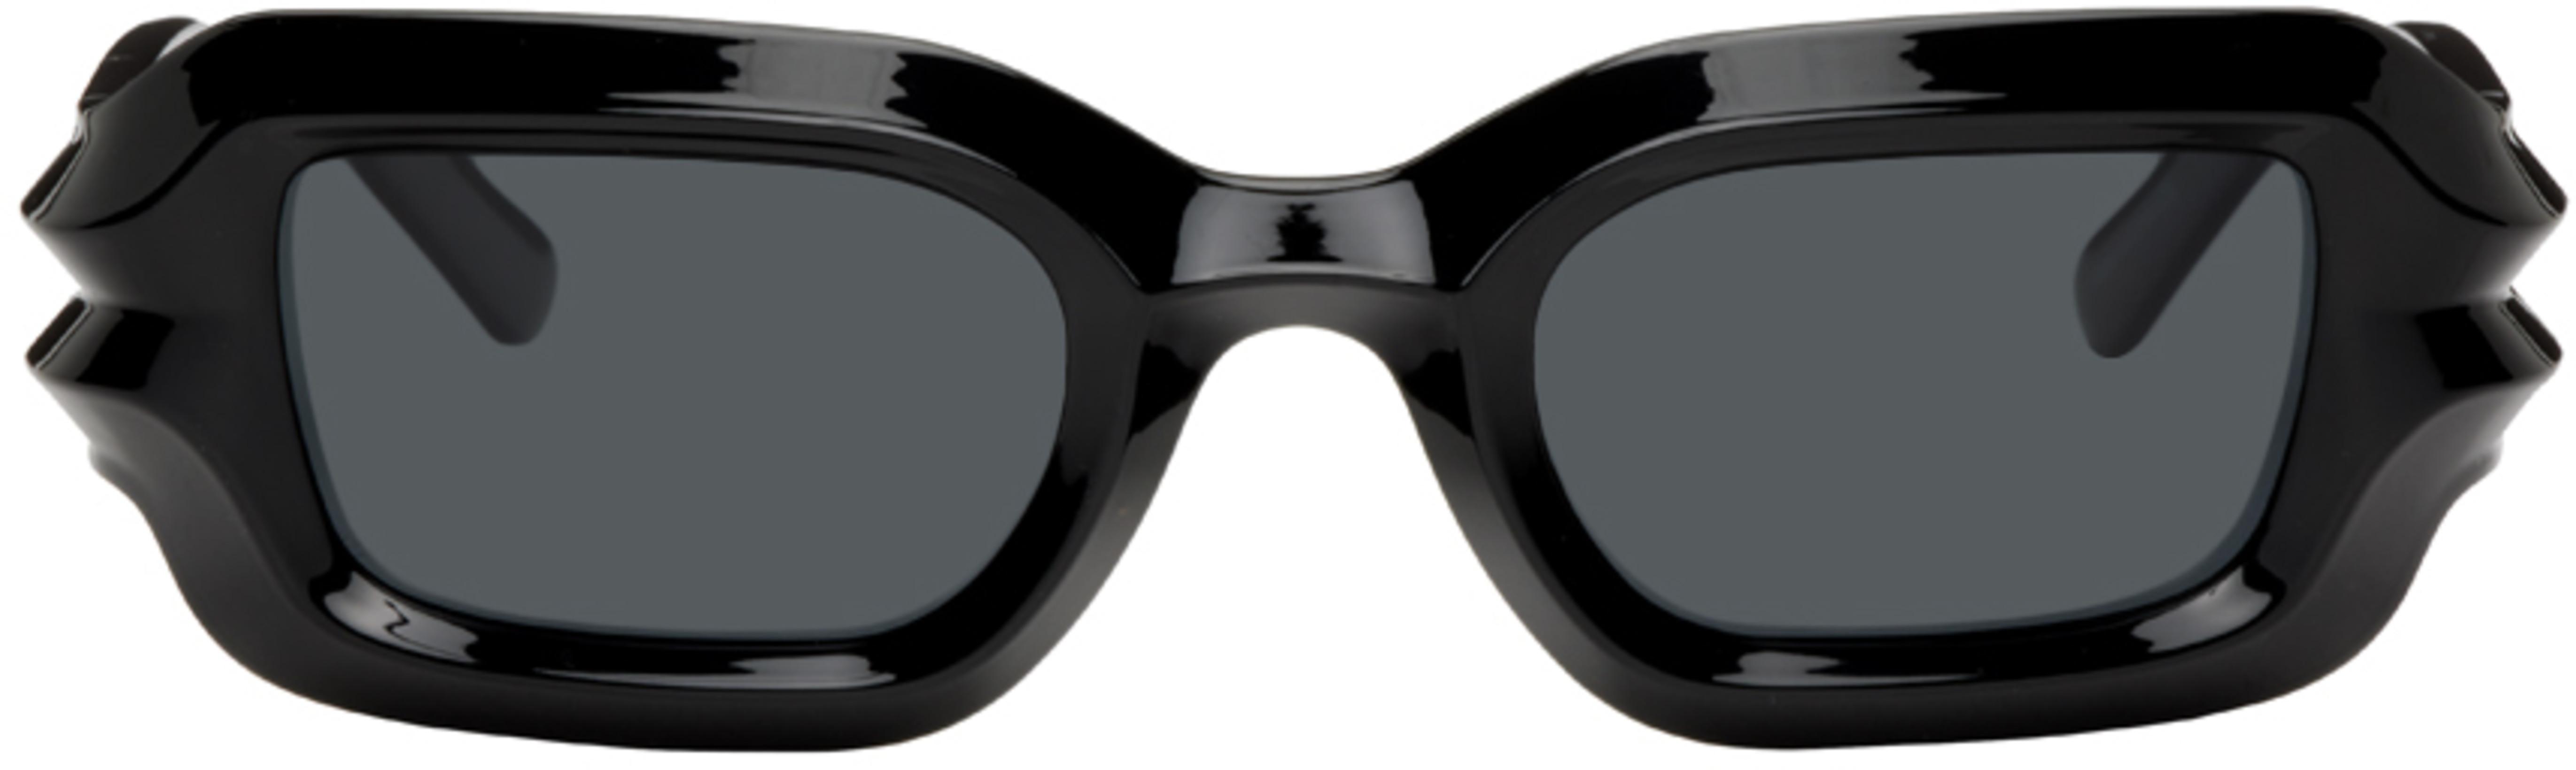 Black Bolu Sunglasses by A BETTER FEELING